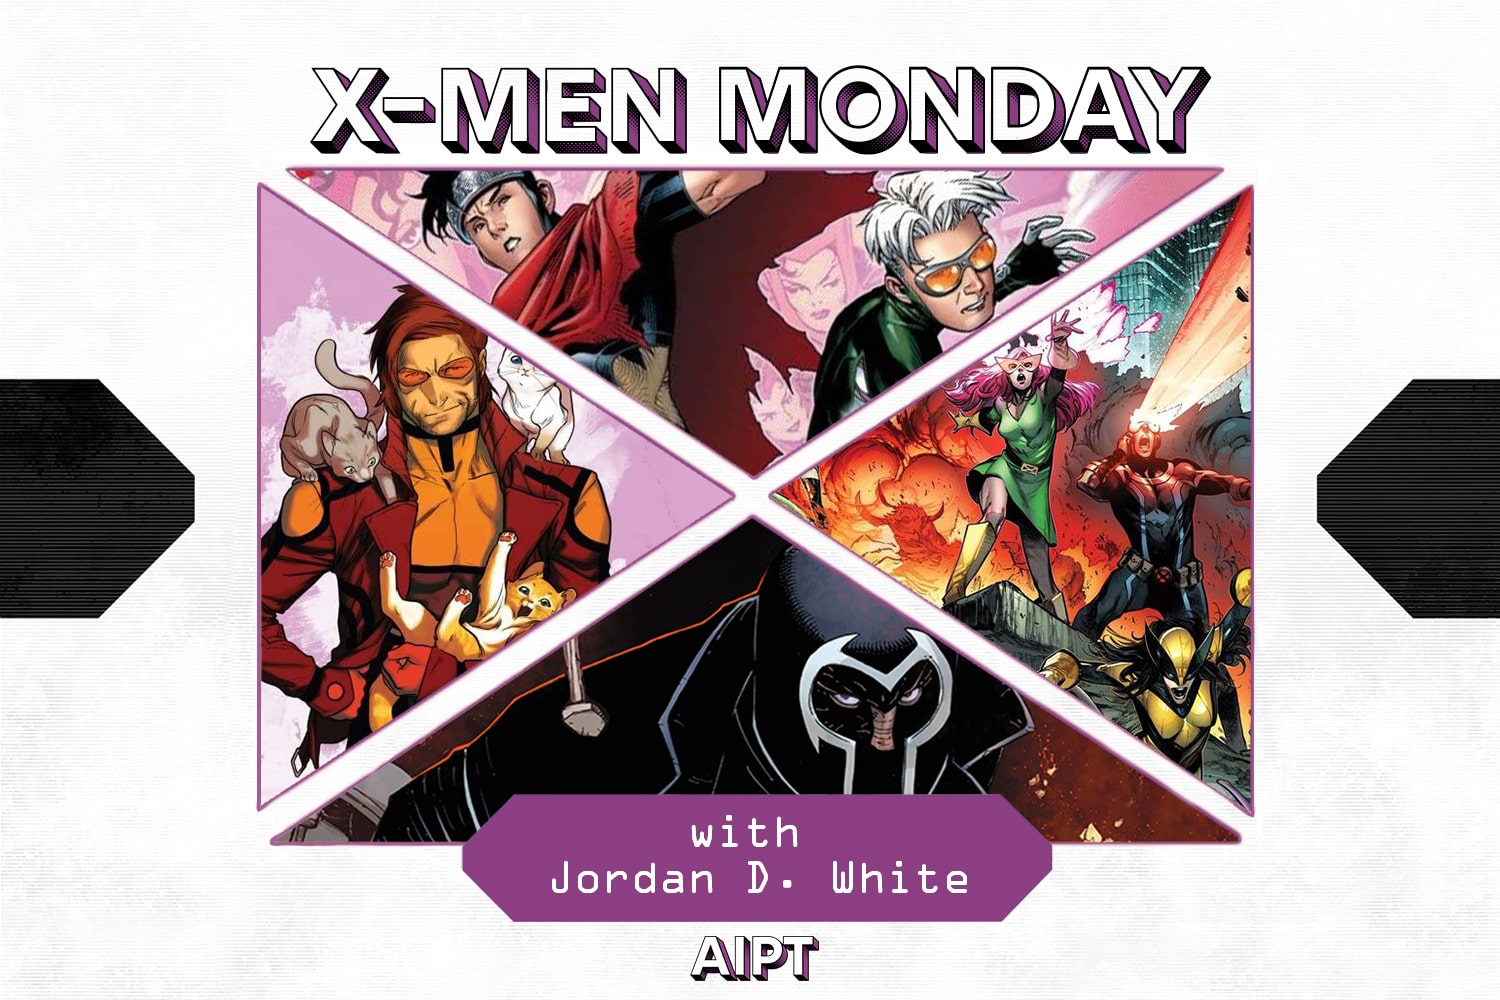 X-Men Monday #105 - Jordan D. White Talks X-Pets, the New X-Men, 'The Trial of Magneto' and More